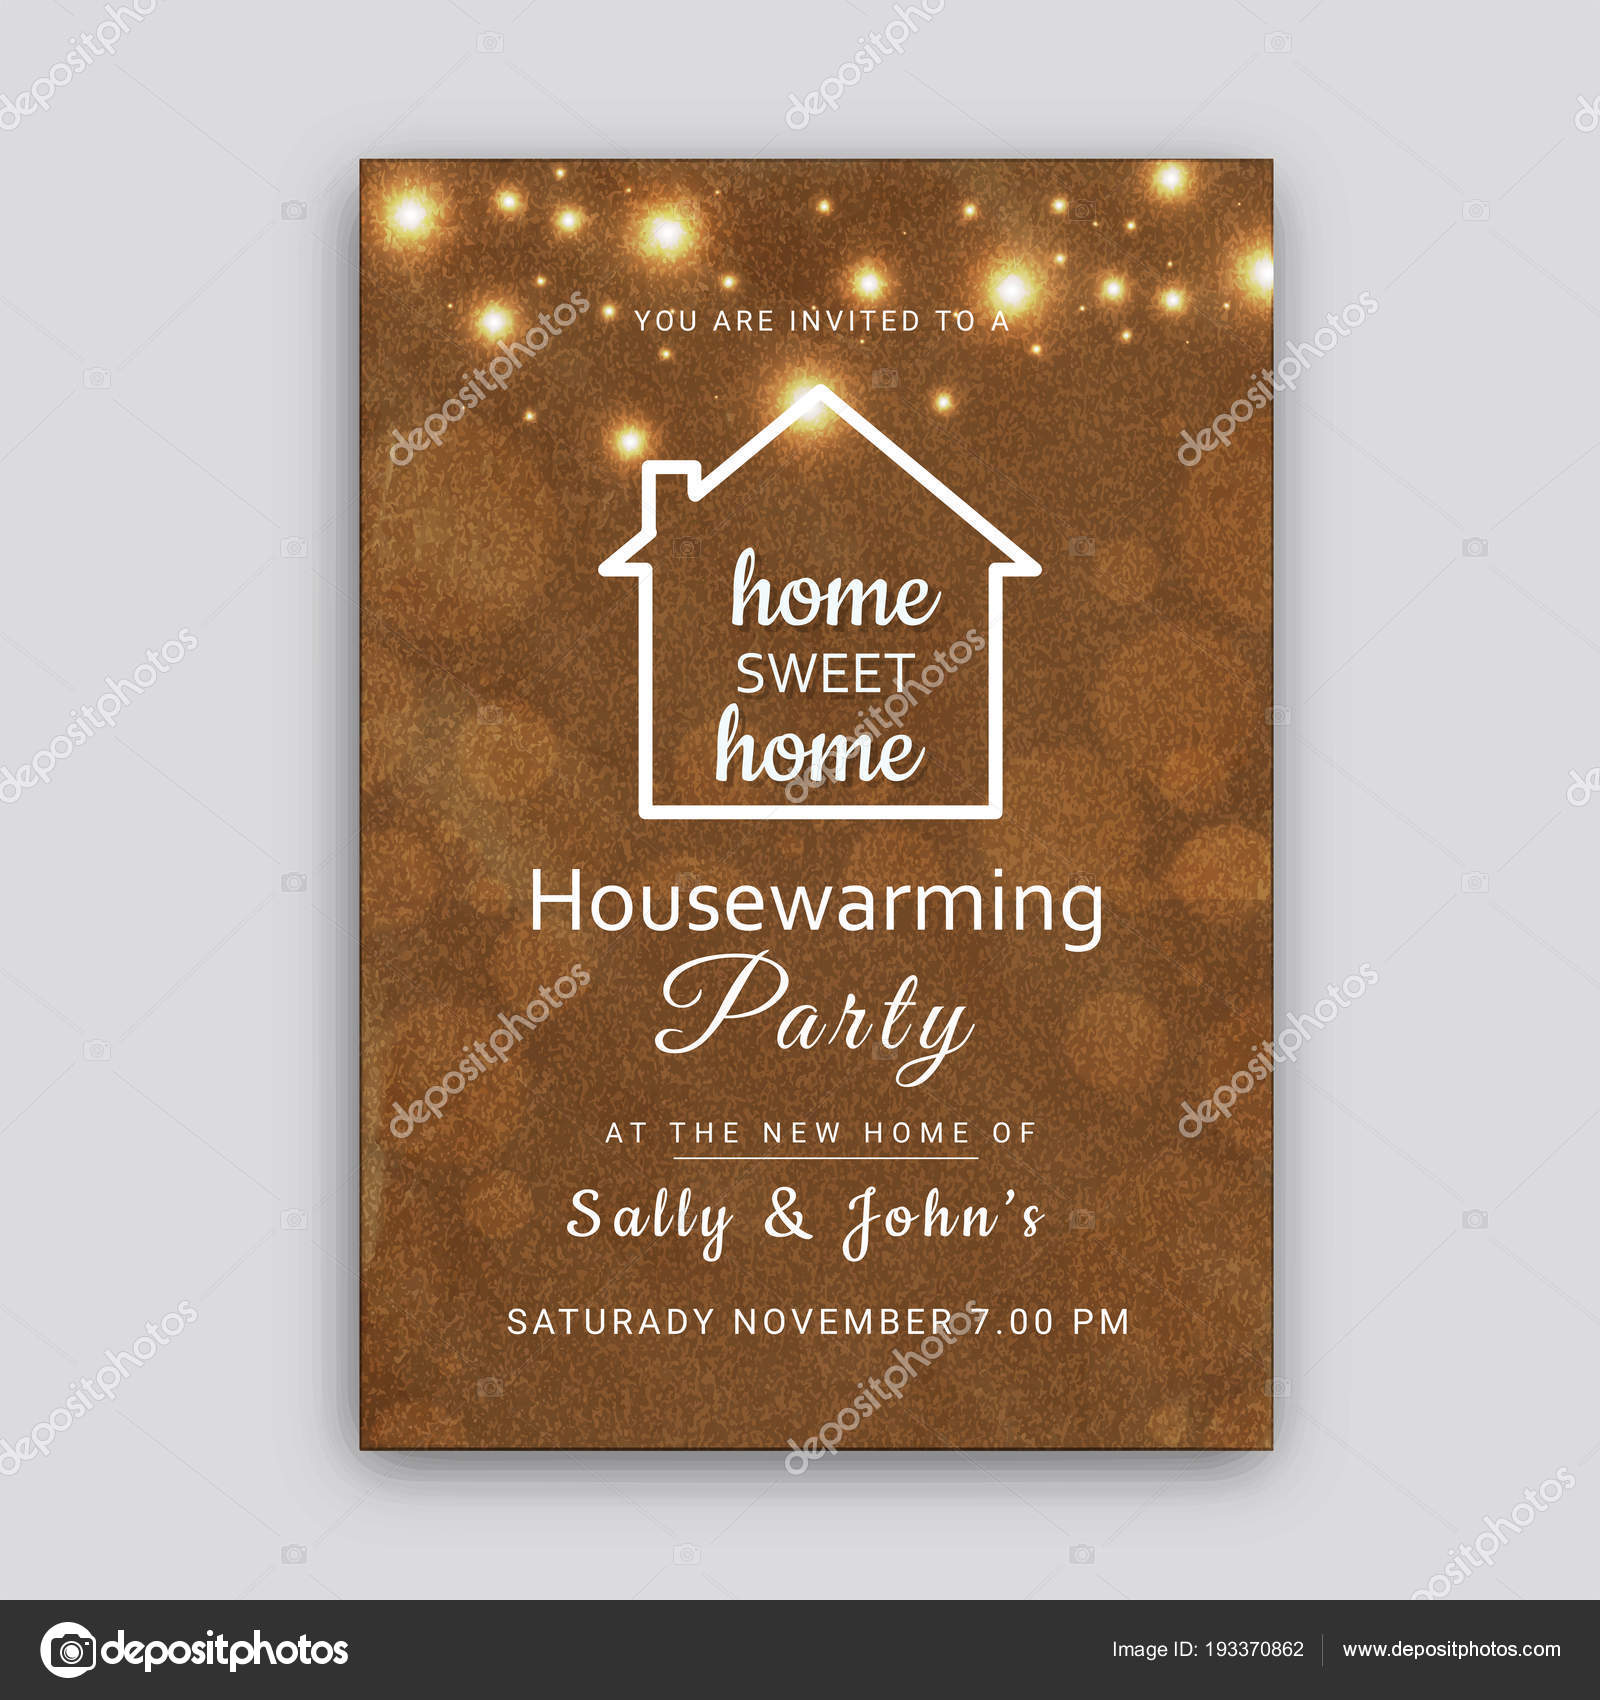 free-housewarming-invitation-card-template